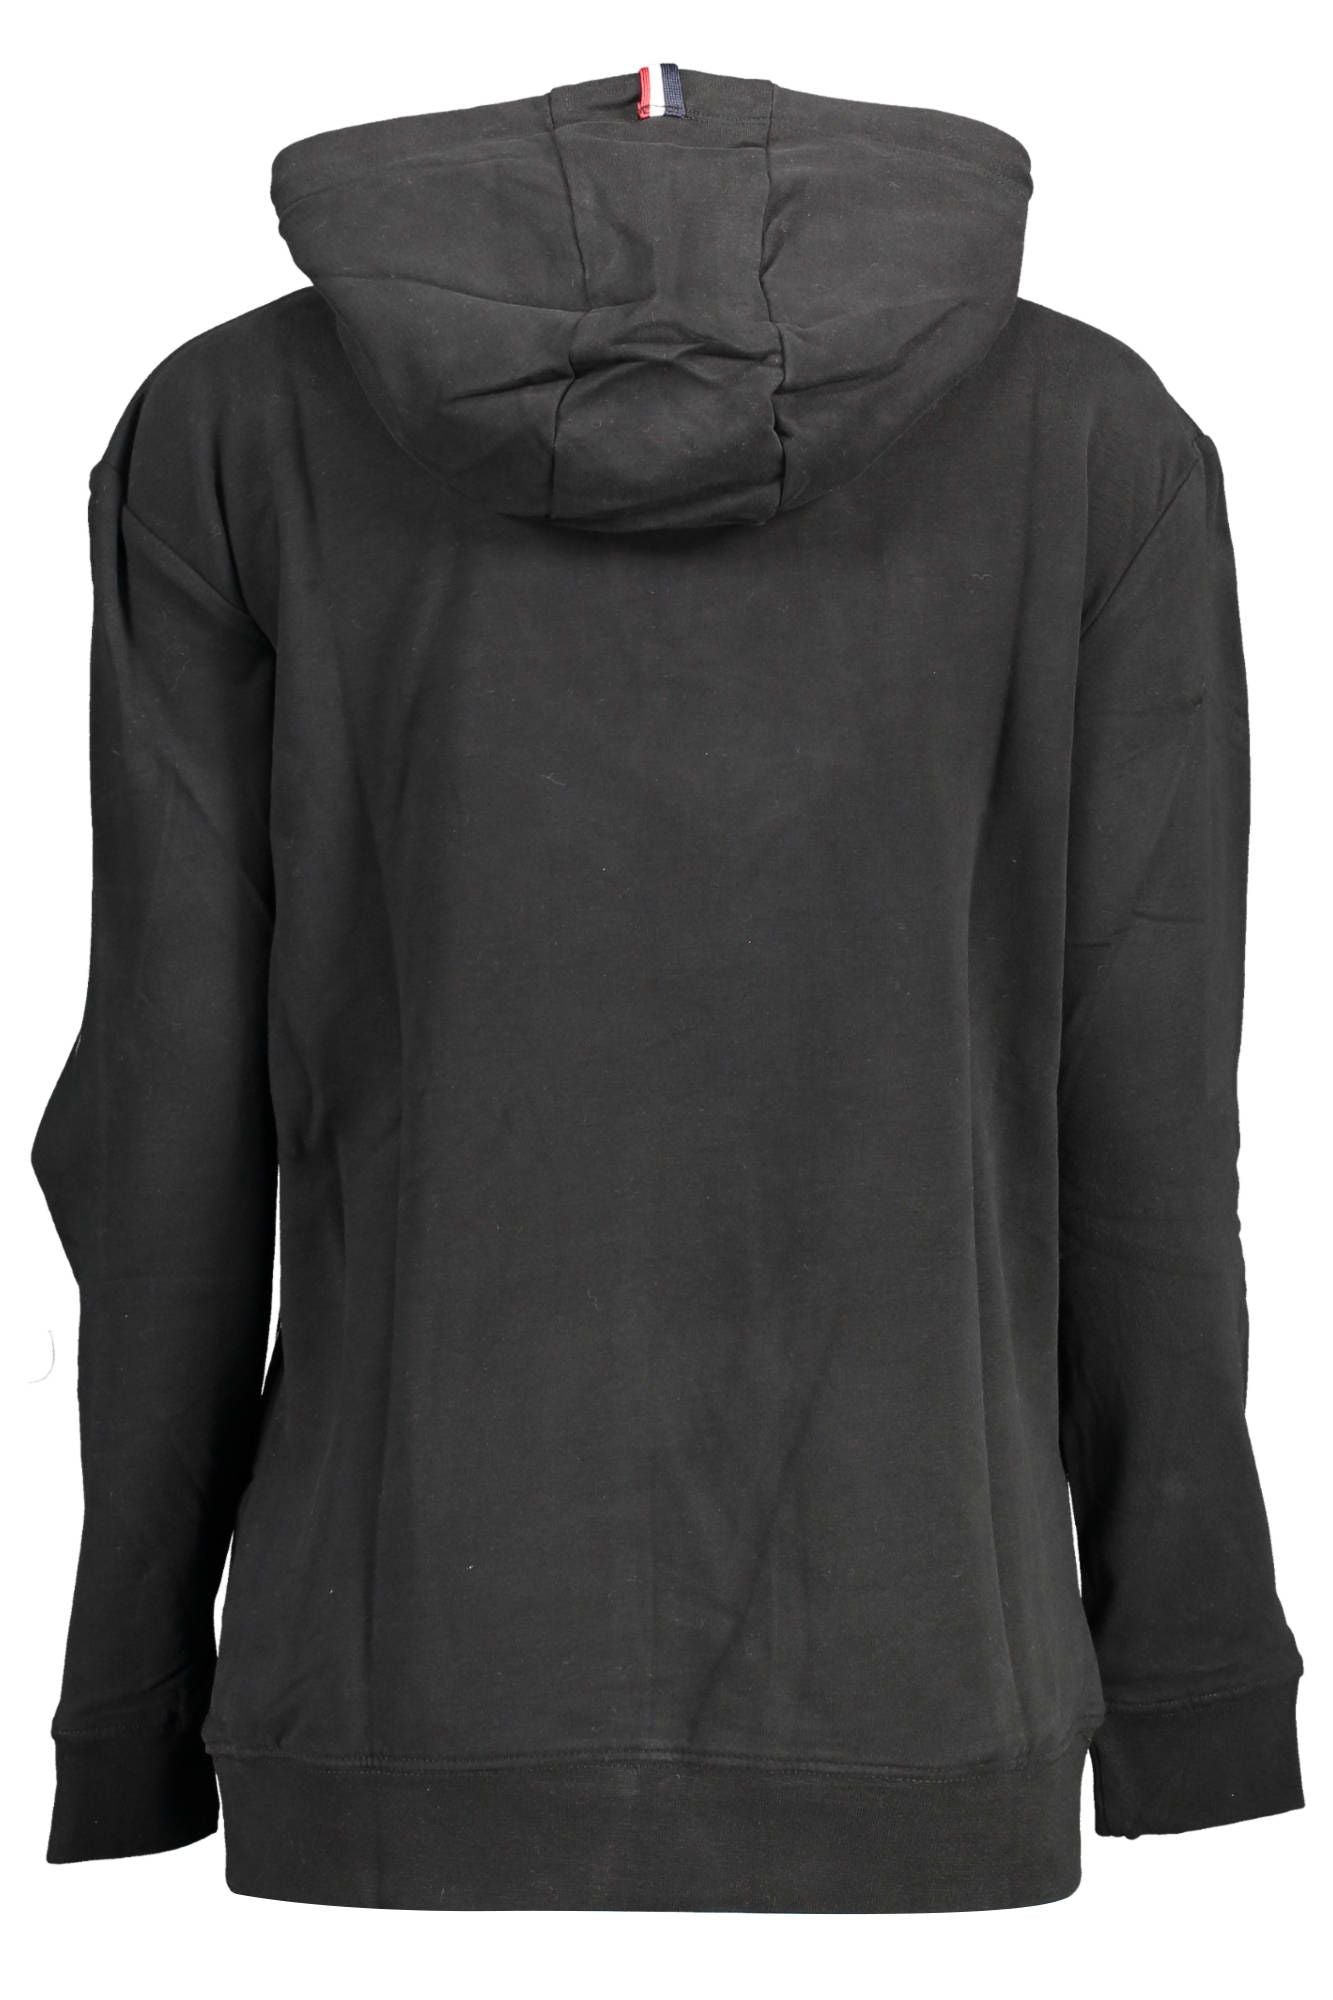 U.S. Polo Assn. Women's Black Cotton Sweater Hoodie